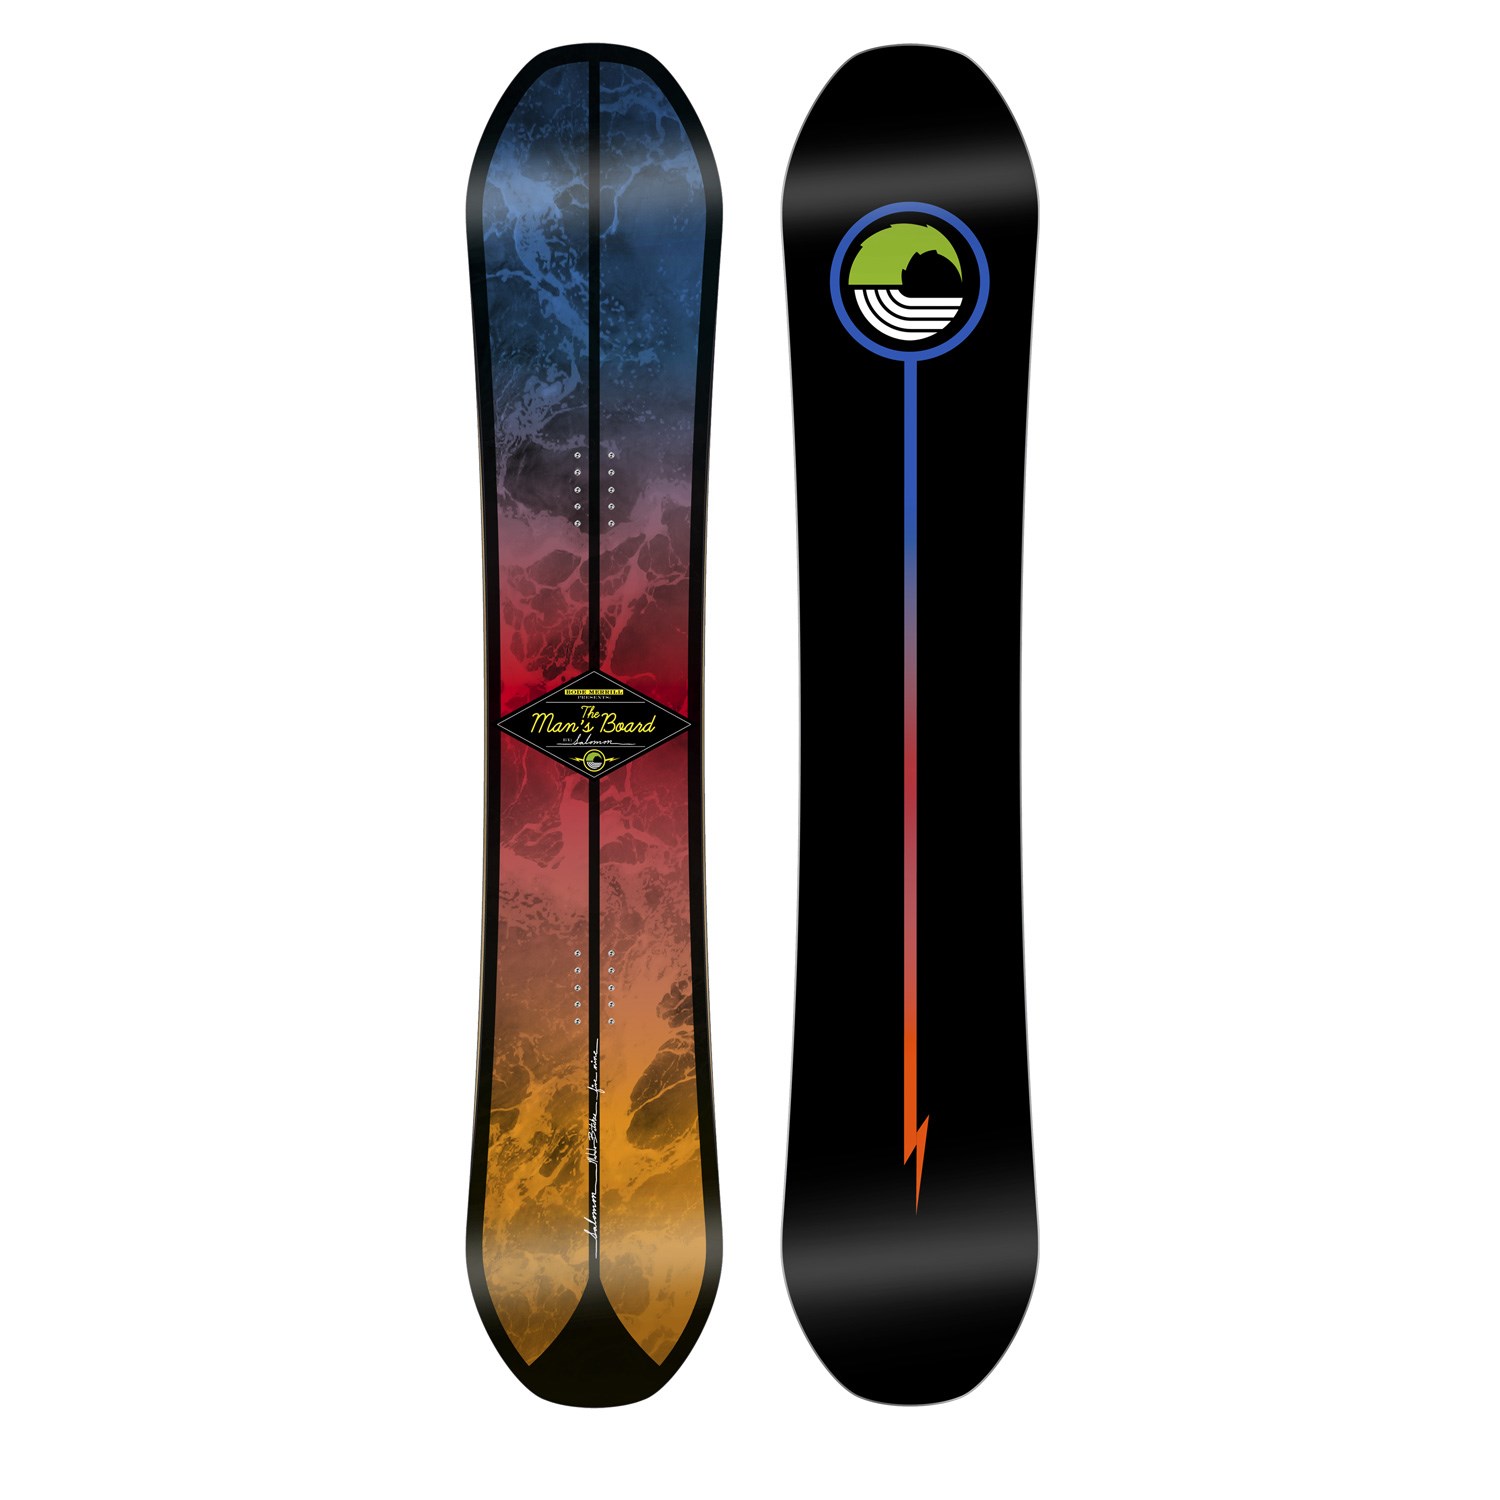 Dodelijk rijk account Salomon Man's Board Snowboard 2016 | evo